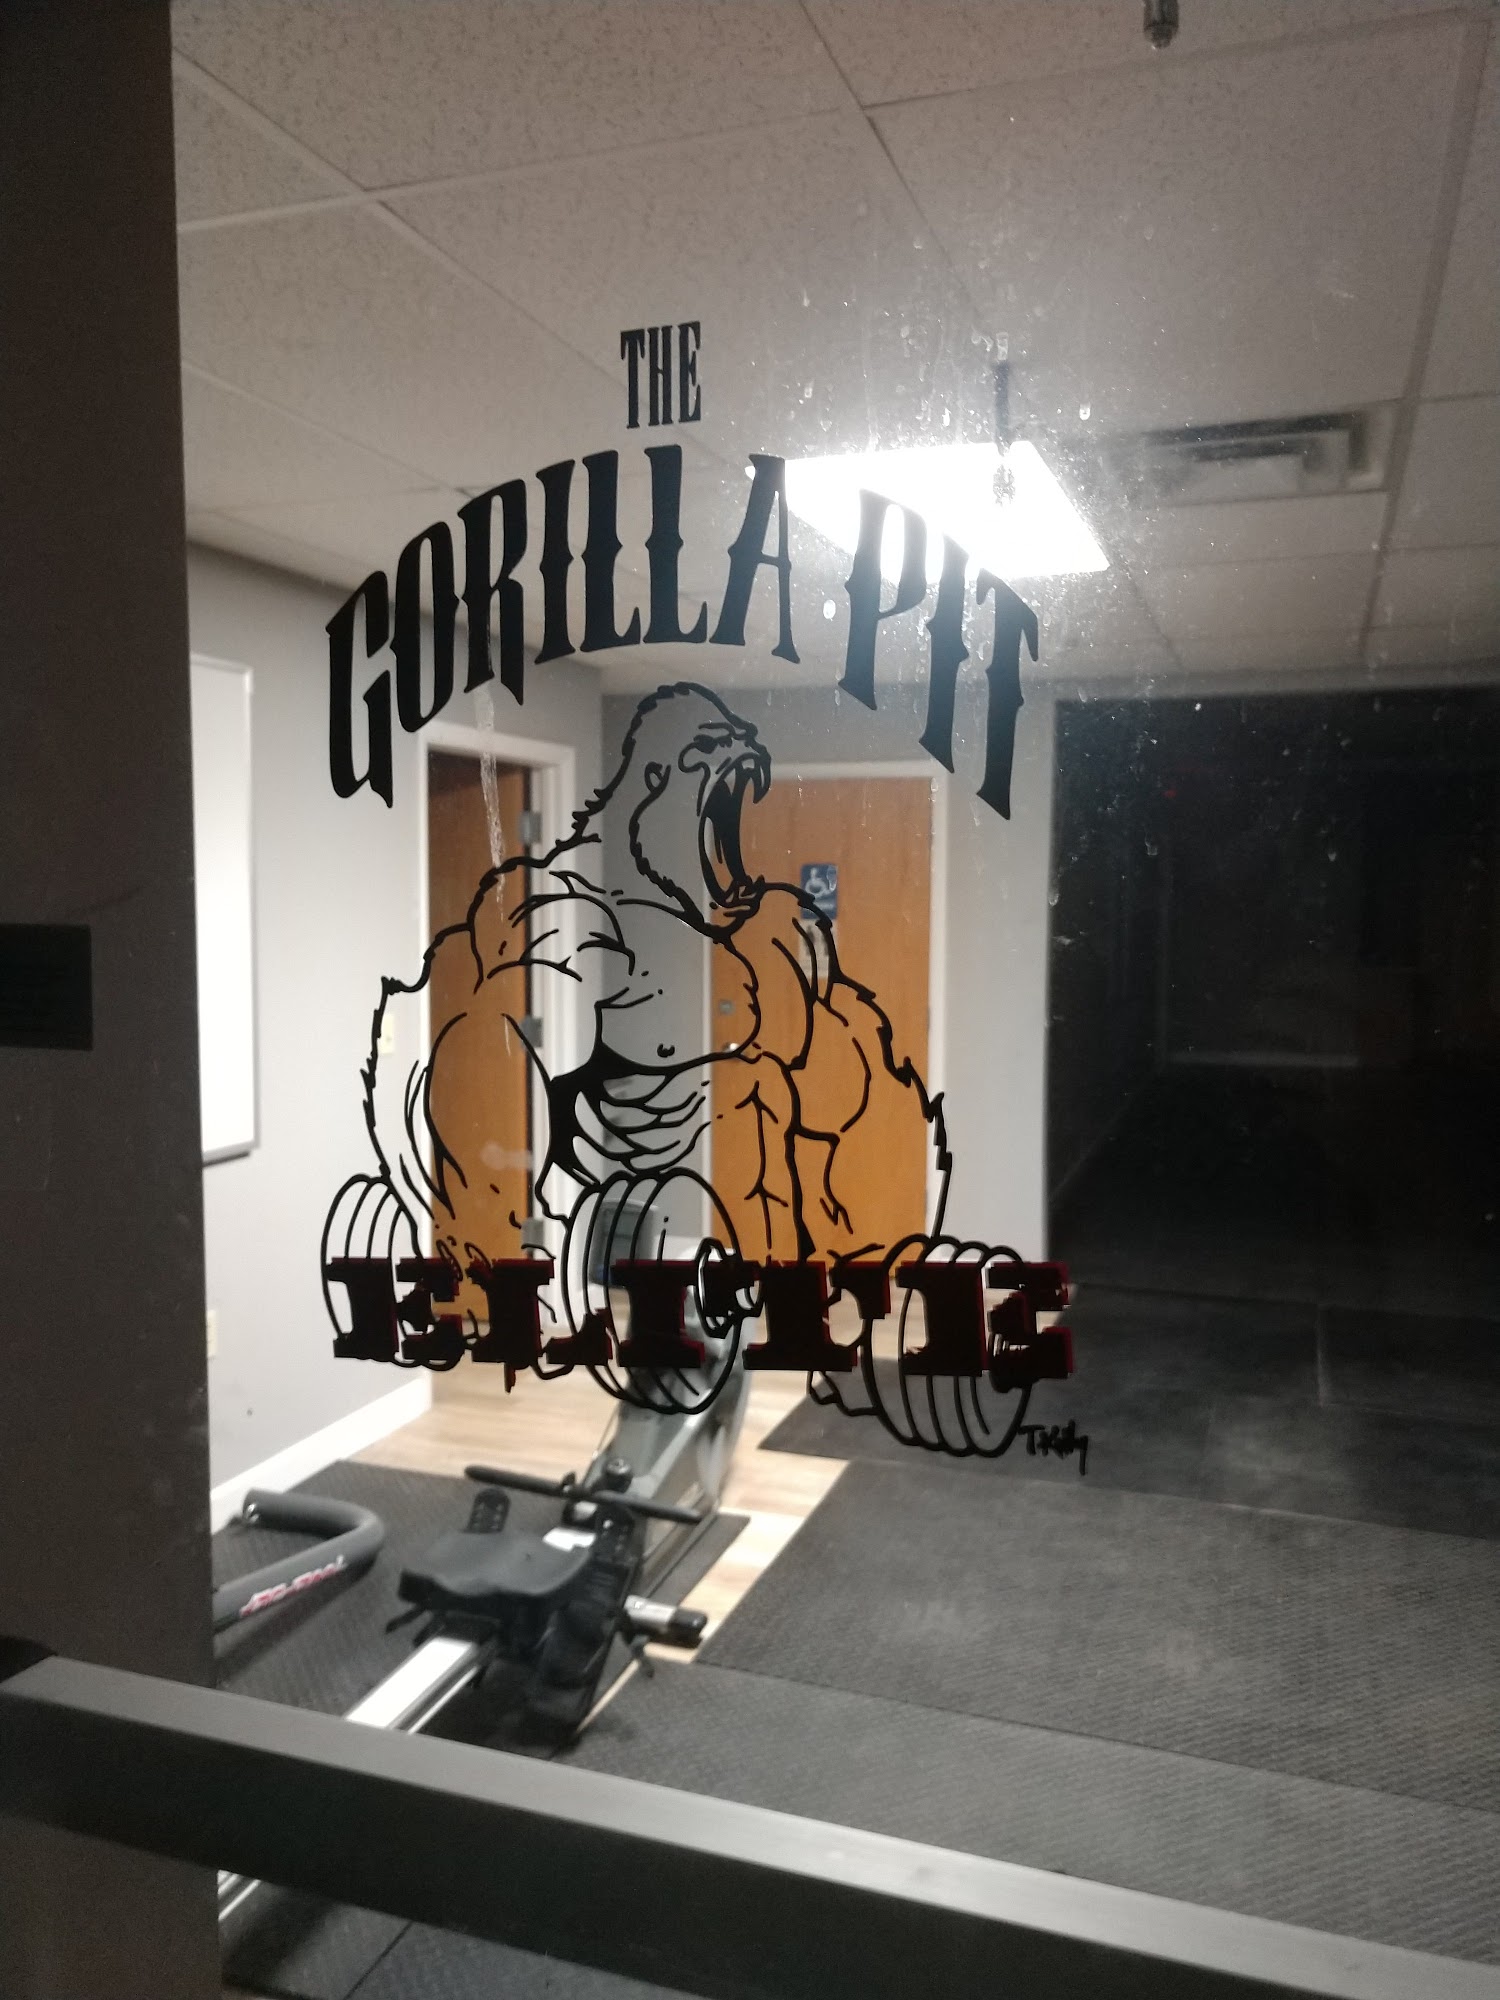 The Gorilla Pit Elite